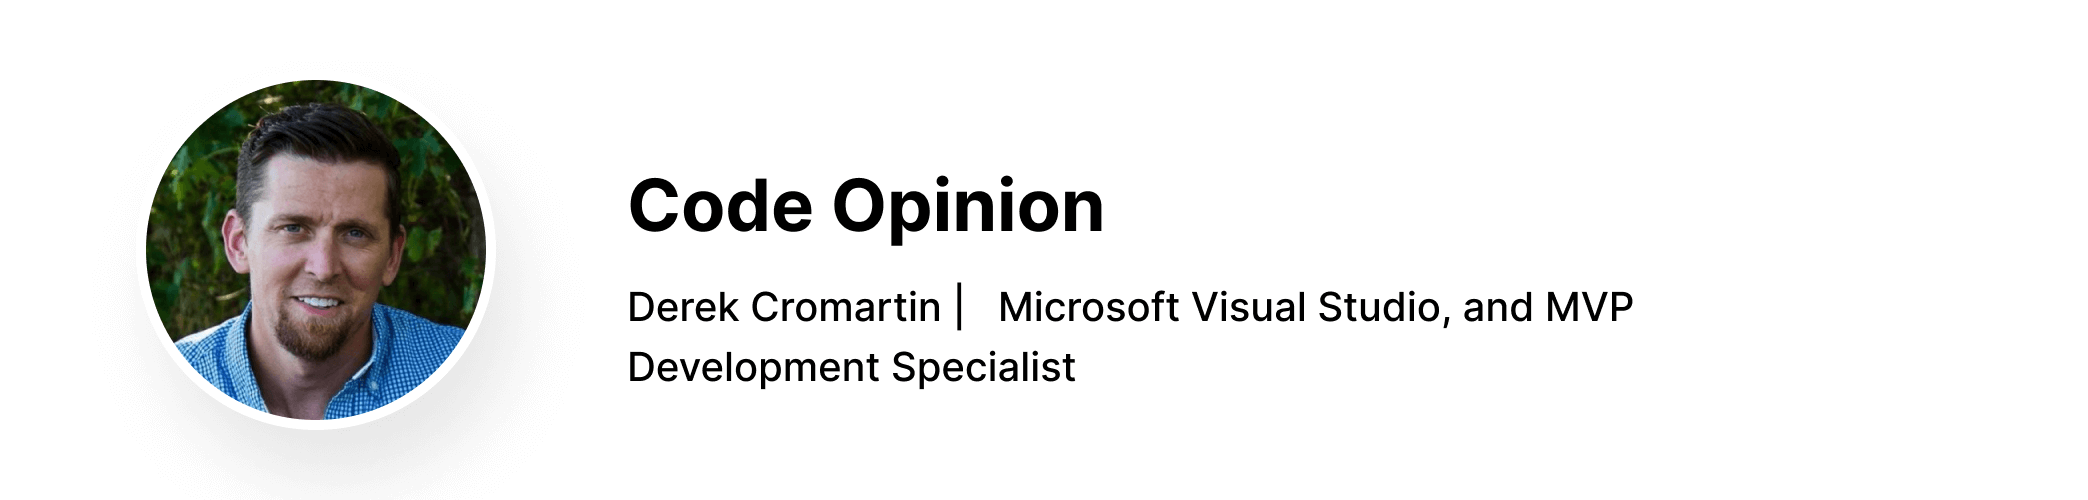 The Business Side of .NET Development - Profile 4